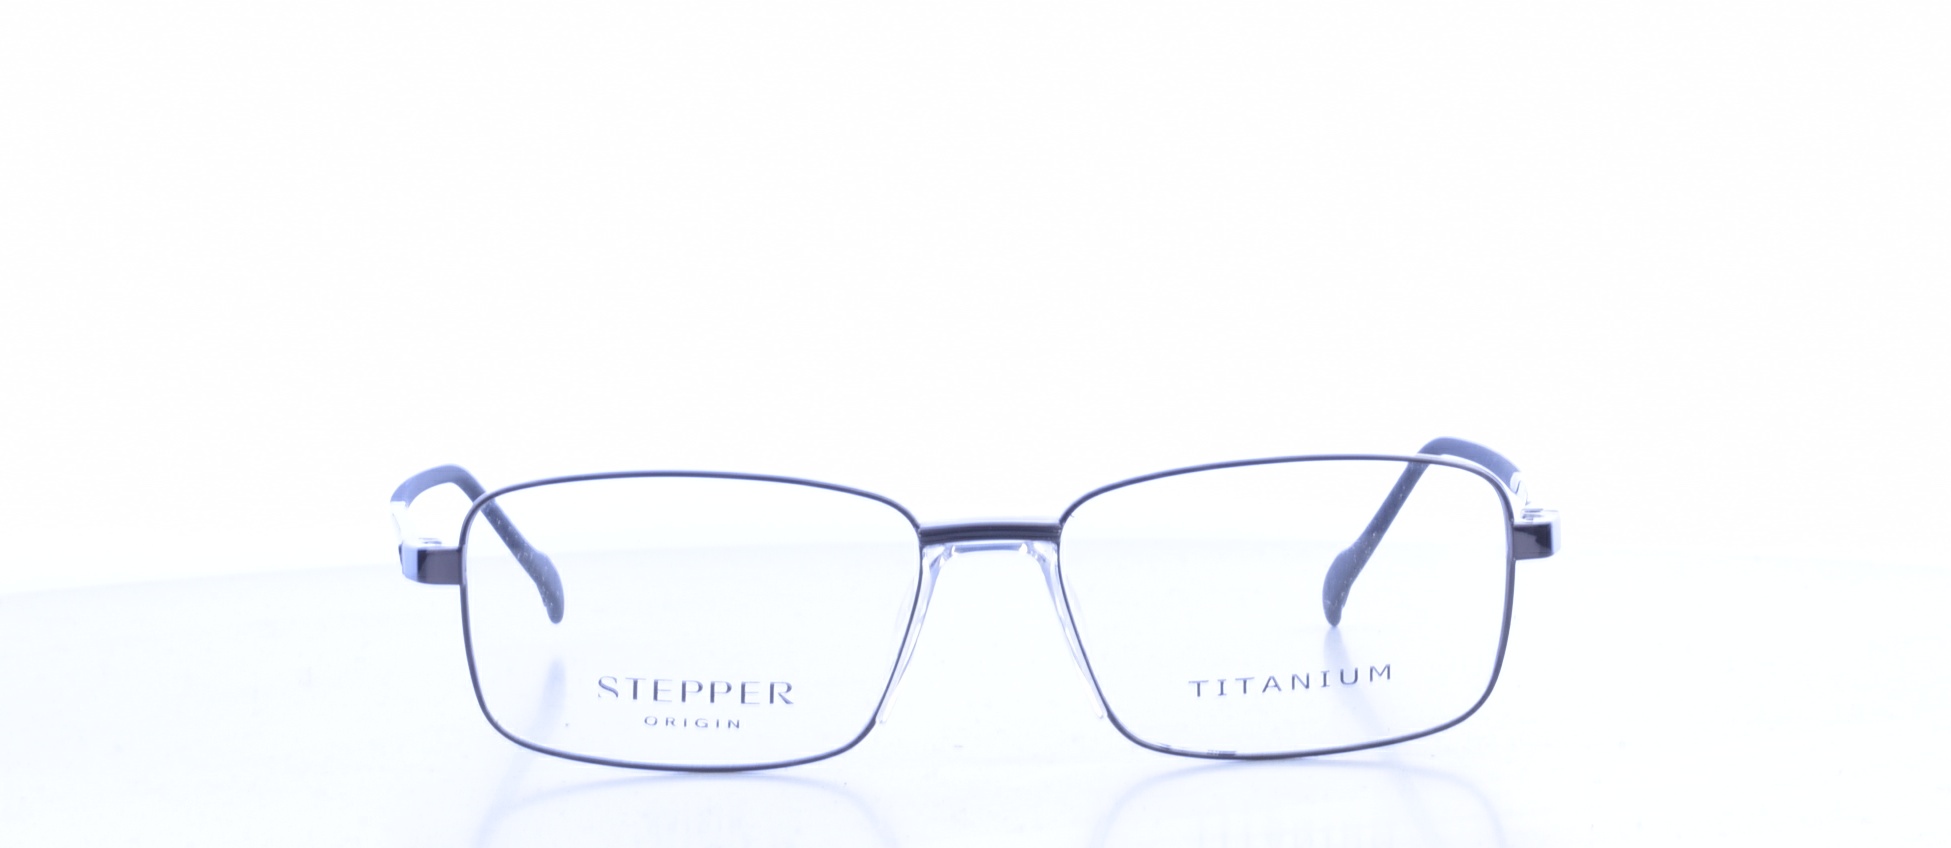 Rama ochelari vedere Stepper